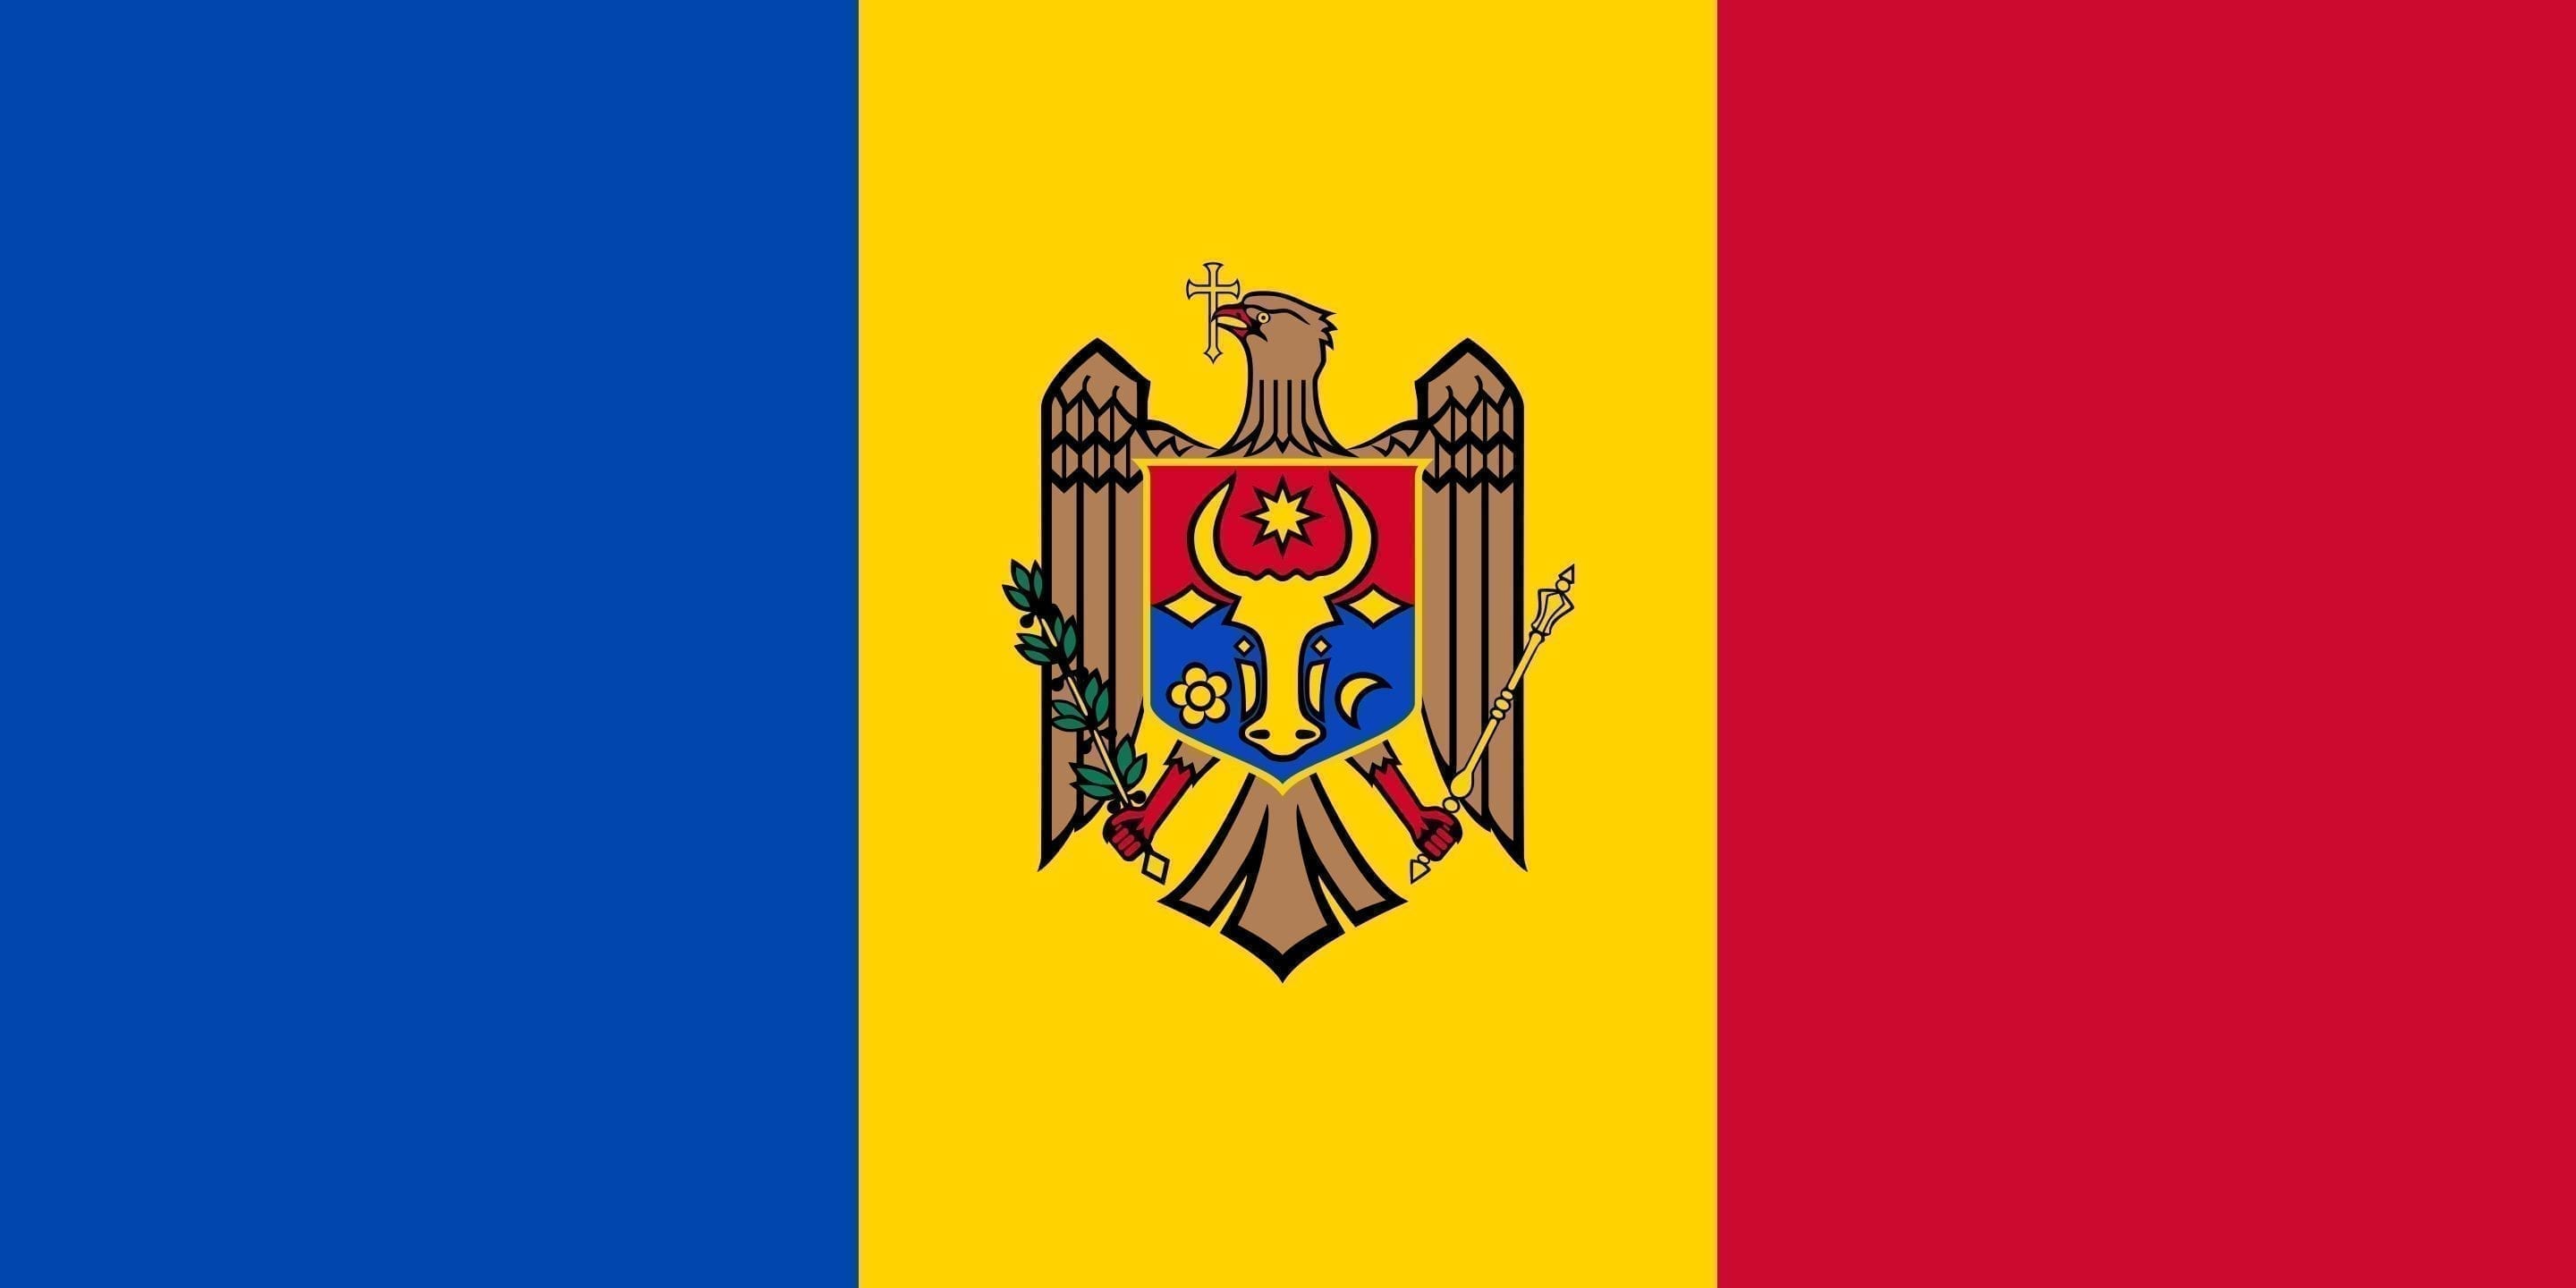 Facts of Moldova